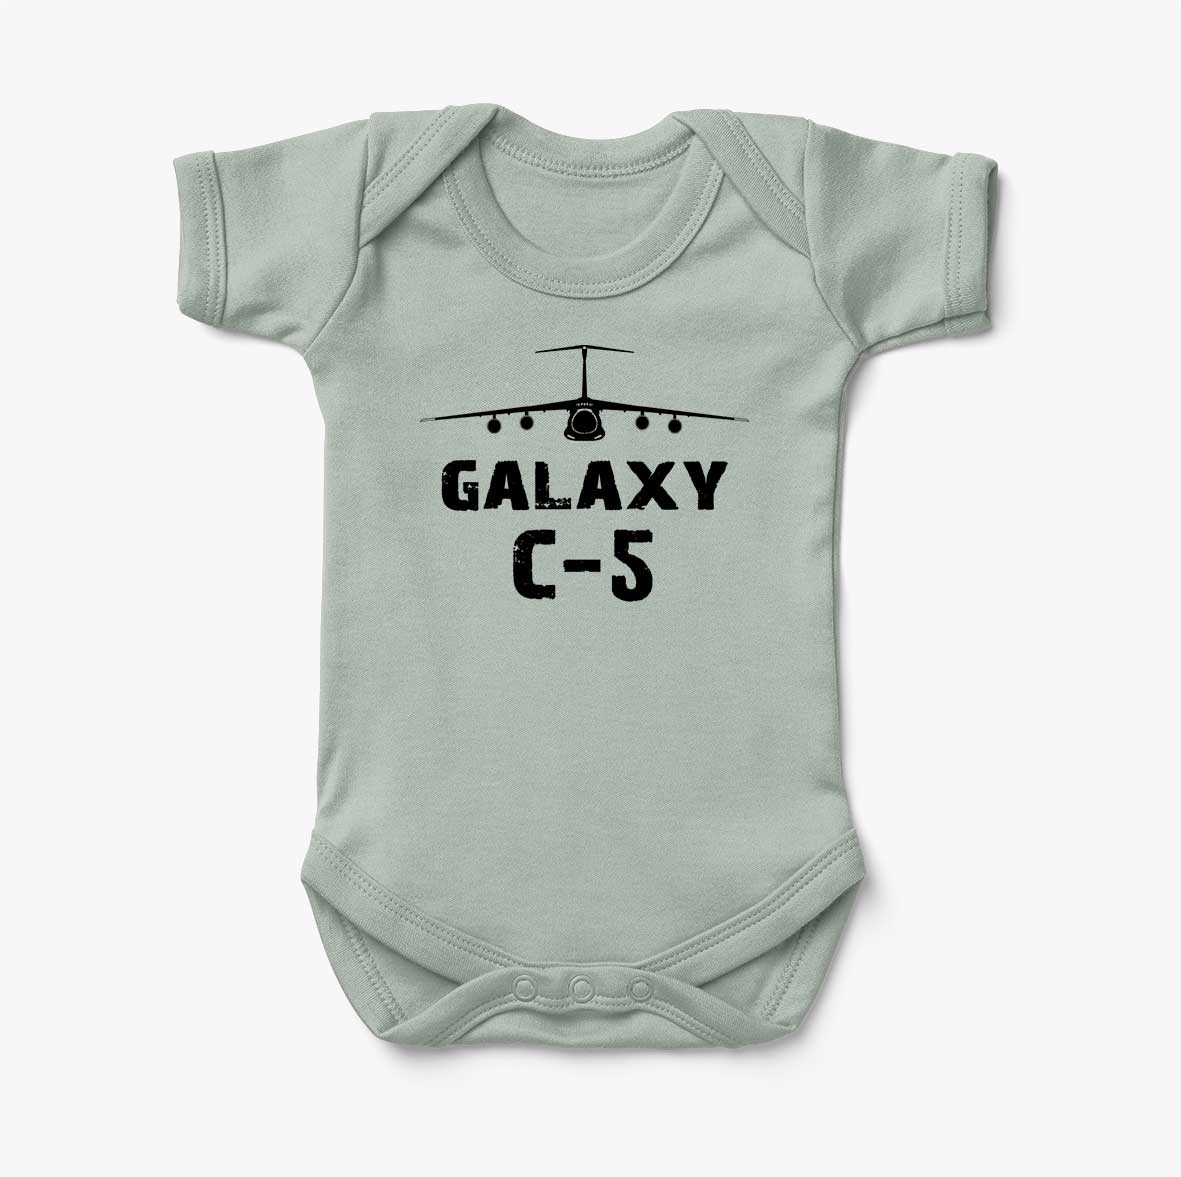 Galaxy C-5 & Plane Designed Baby Bodysuits